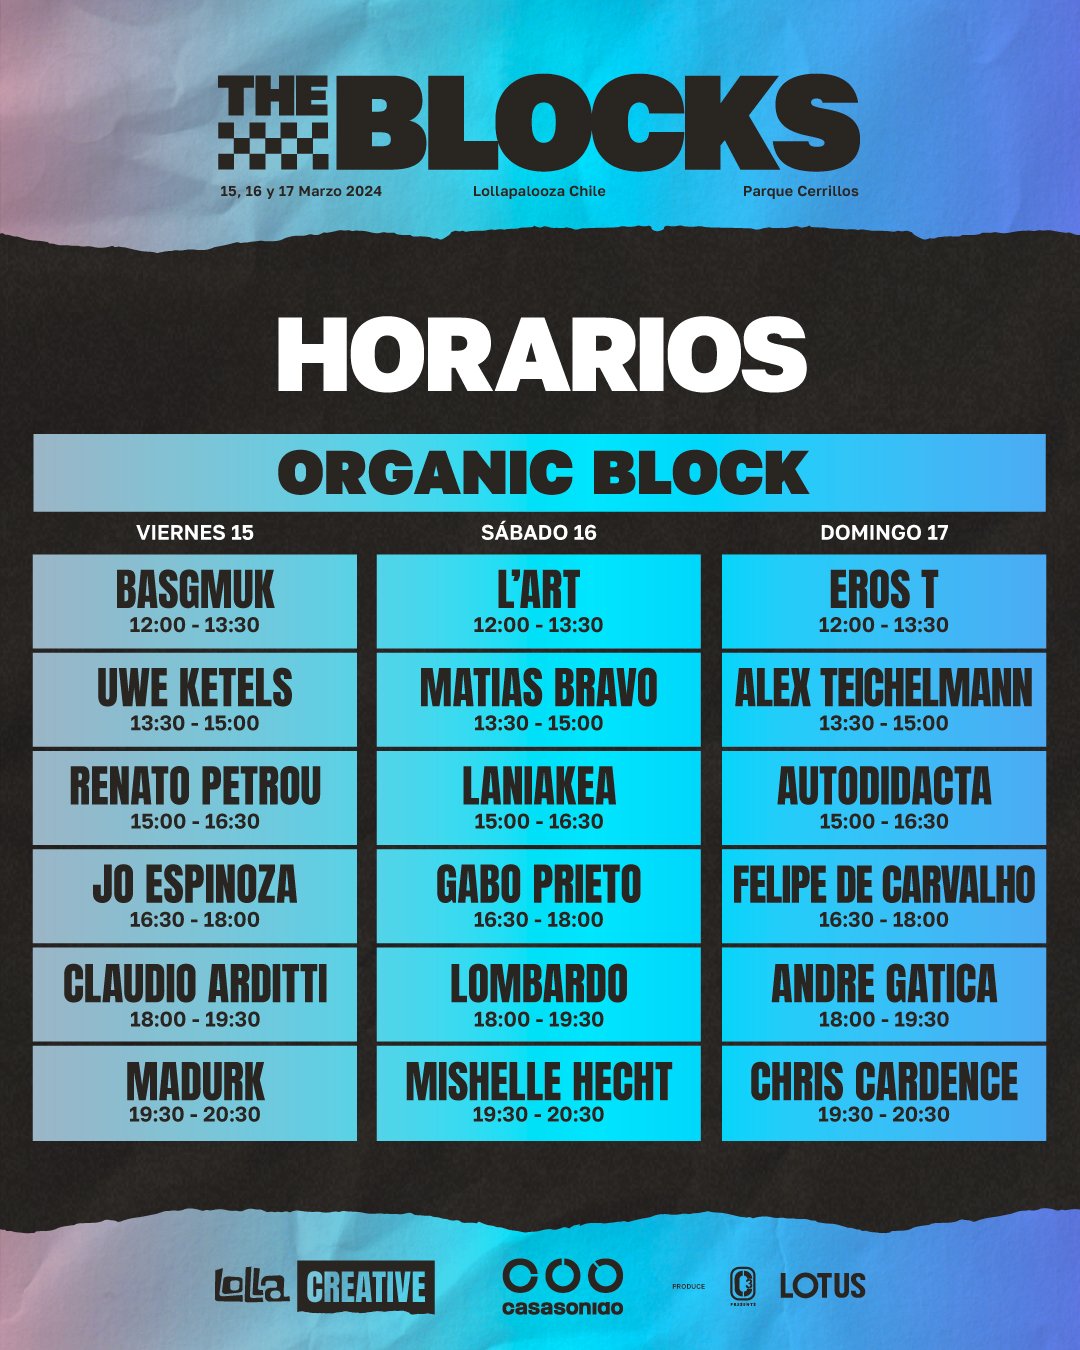 the blocks horarios organic.jpg